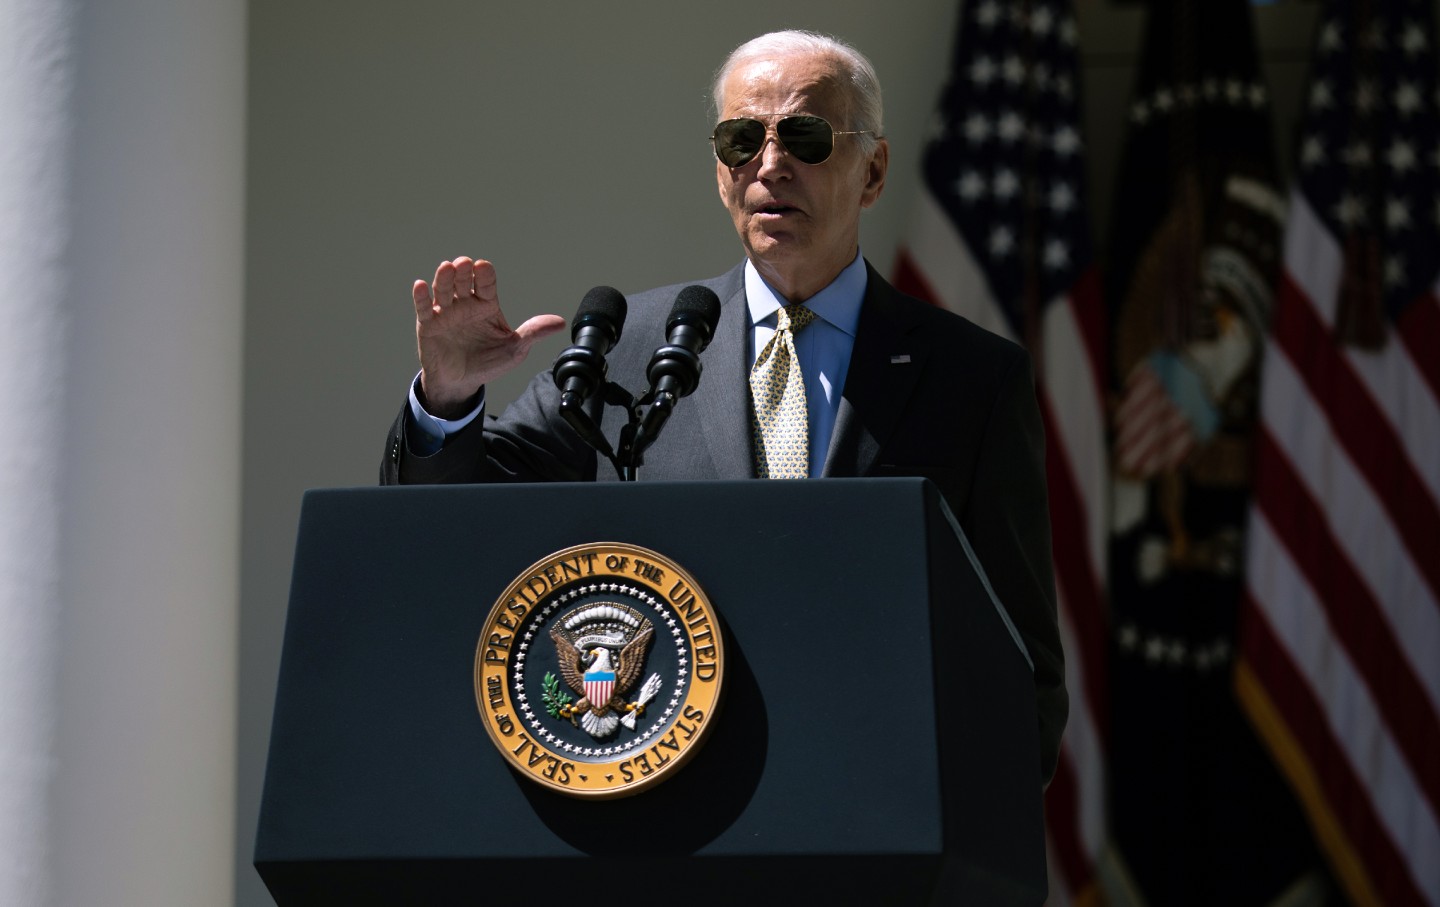 Joe Biden at an outdoor podium raising his hand and wearing sunglasses.